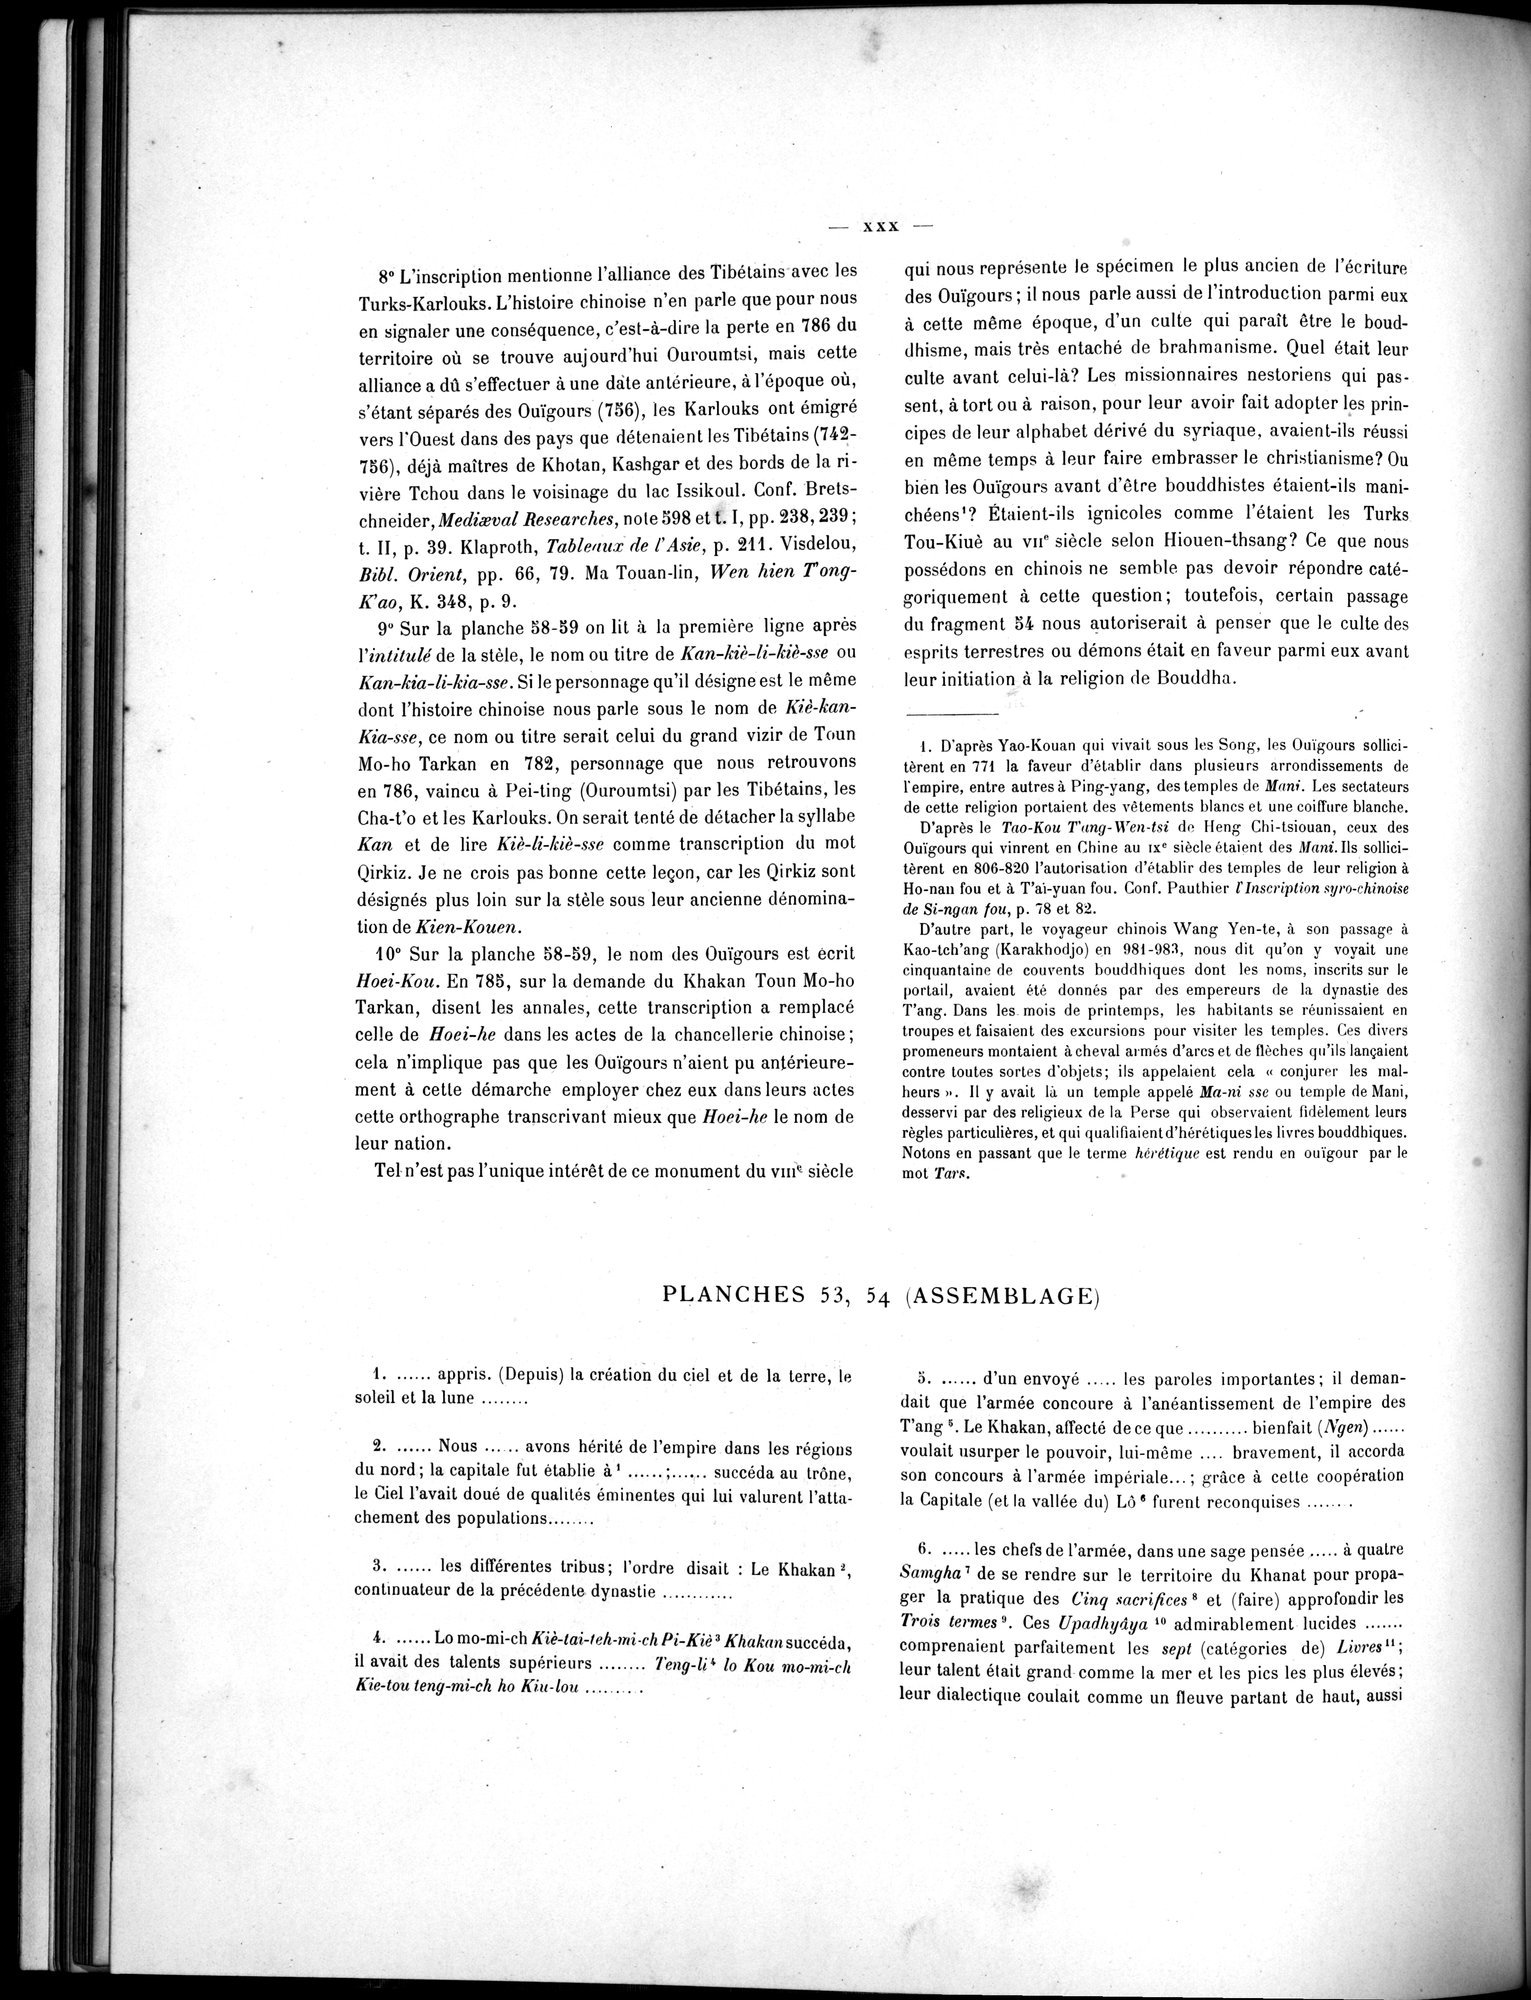 Inscriptions de l'Orkhon : vol.1 / Page 48 (Grayscale High Resolution Image)